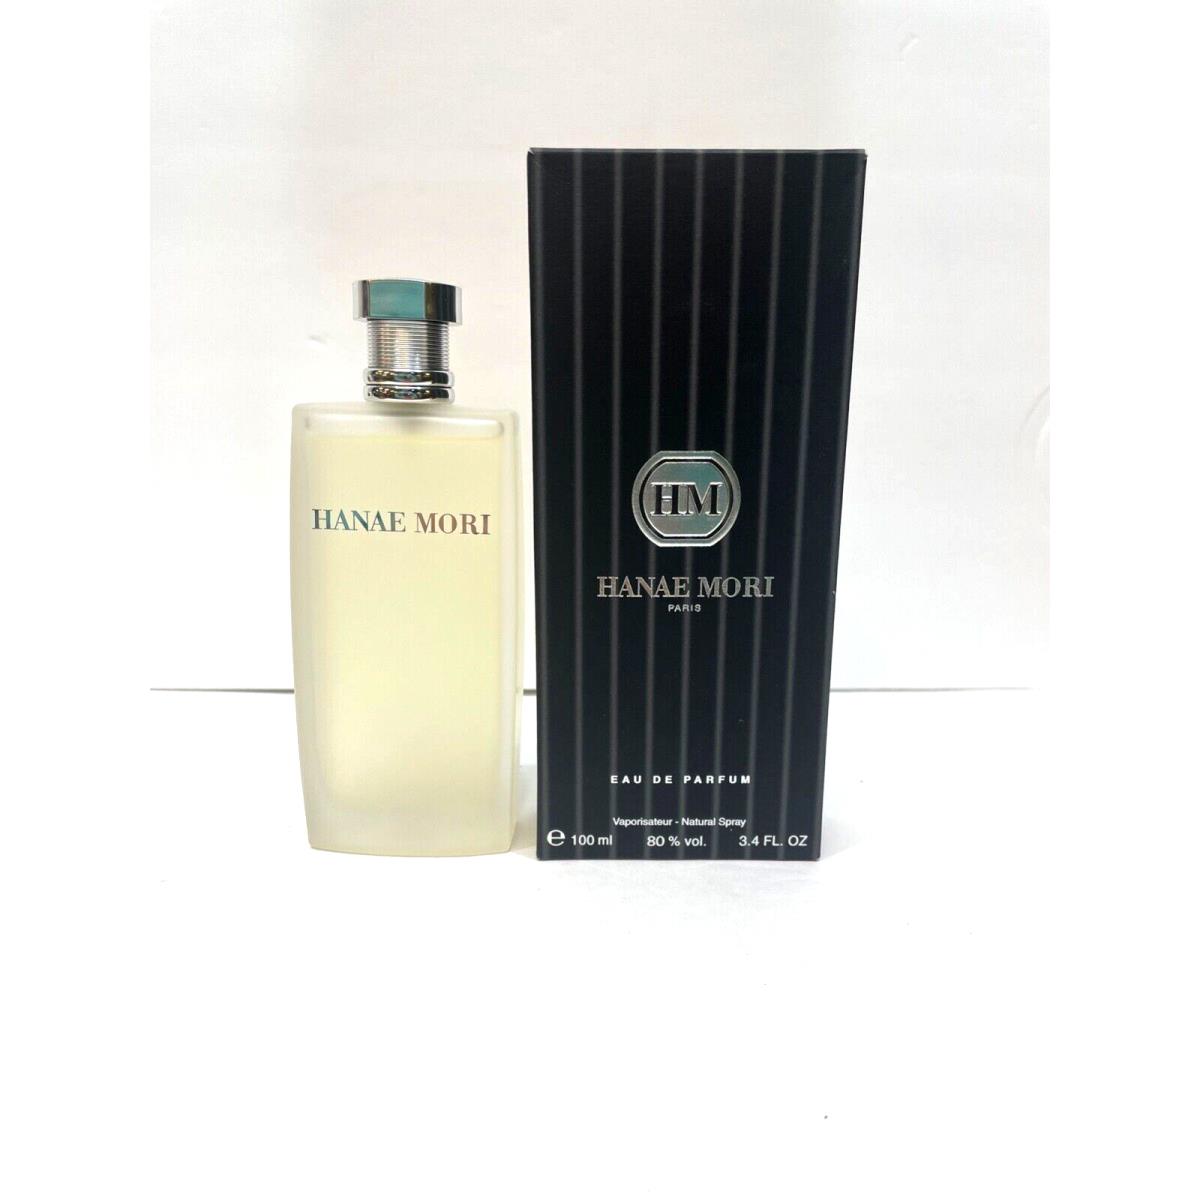 HM Hanae Mori Men Cologne Eau de Parfum Spray 3.4 oz / 100 mL Niob AS Pic